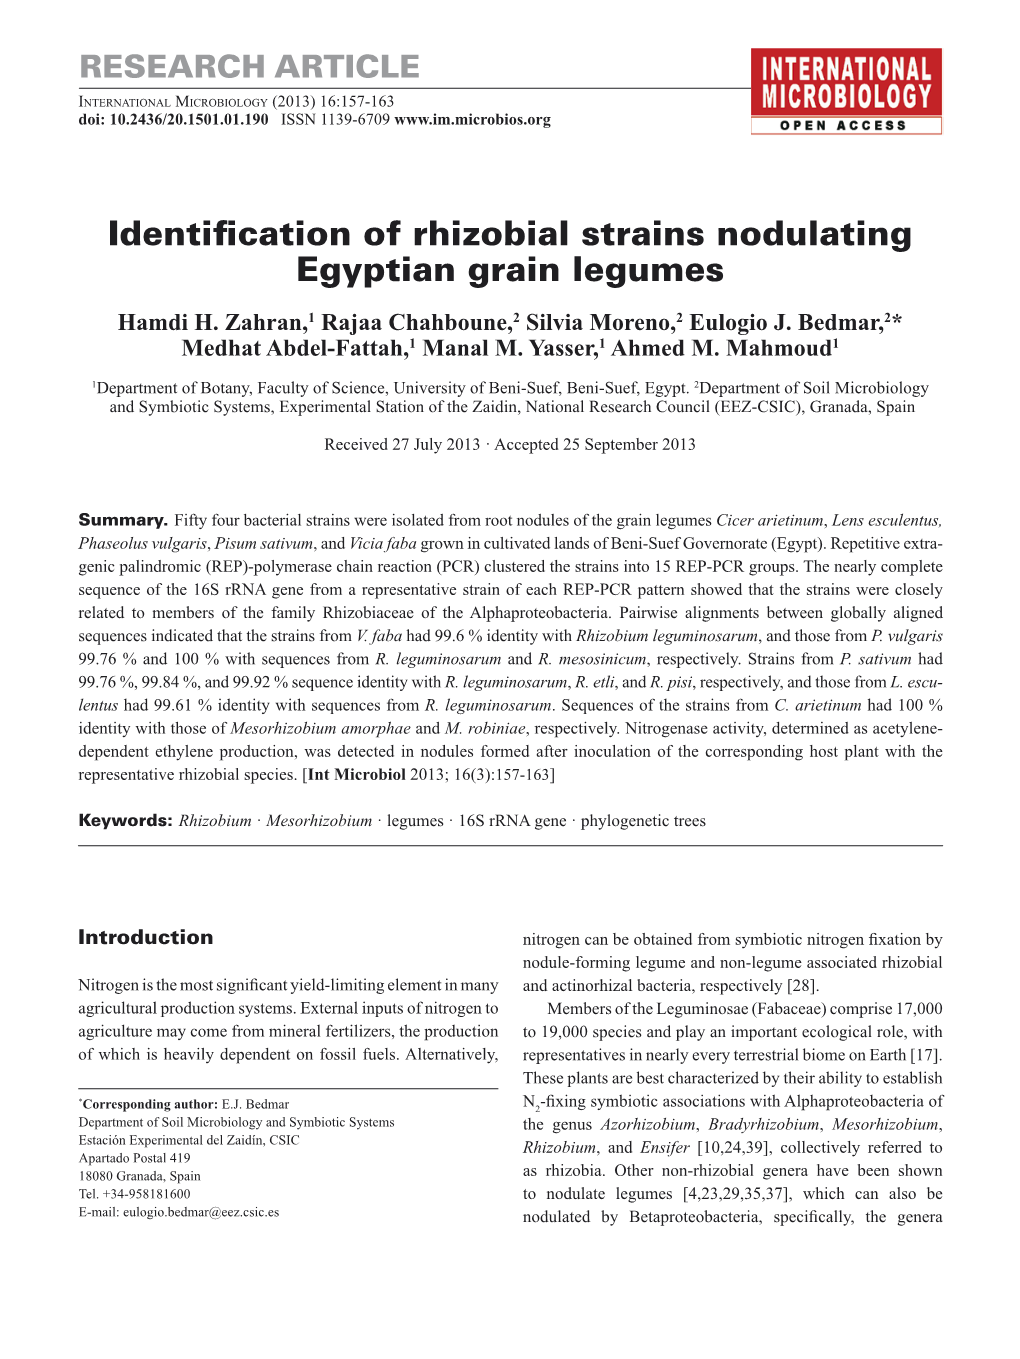 Identification of Rhizobial Strains Nodulating Egyptian Grain Legumes Hamdi H